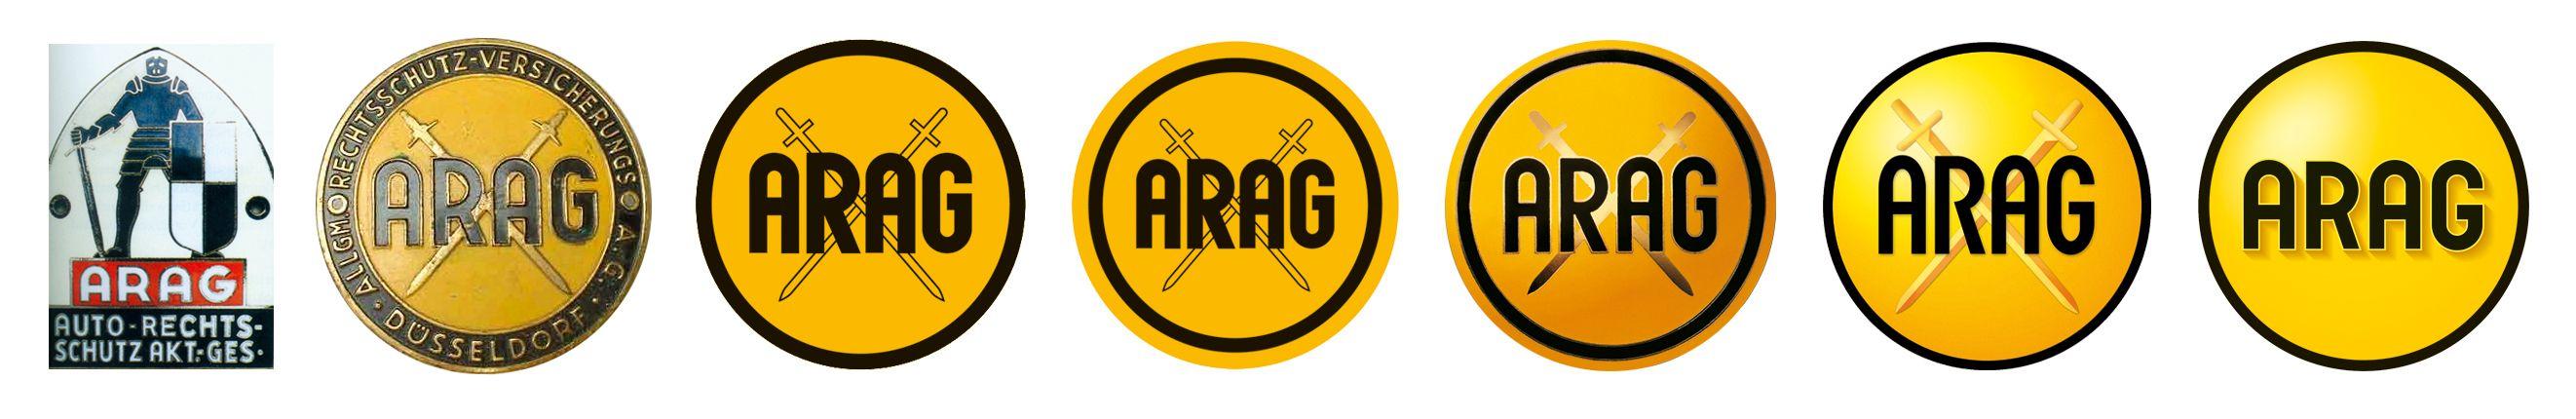 Schutz Logo - ARAG Updates its Logo